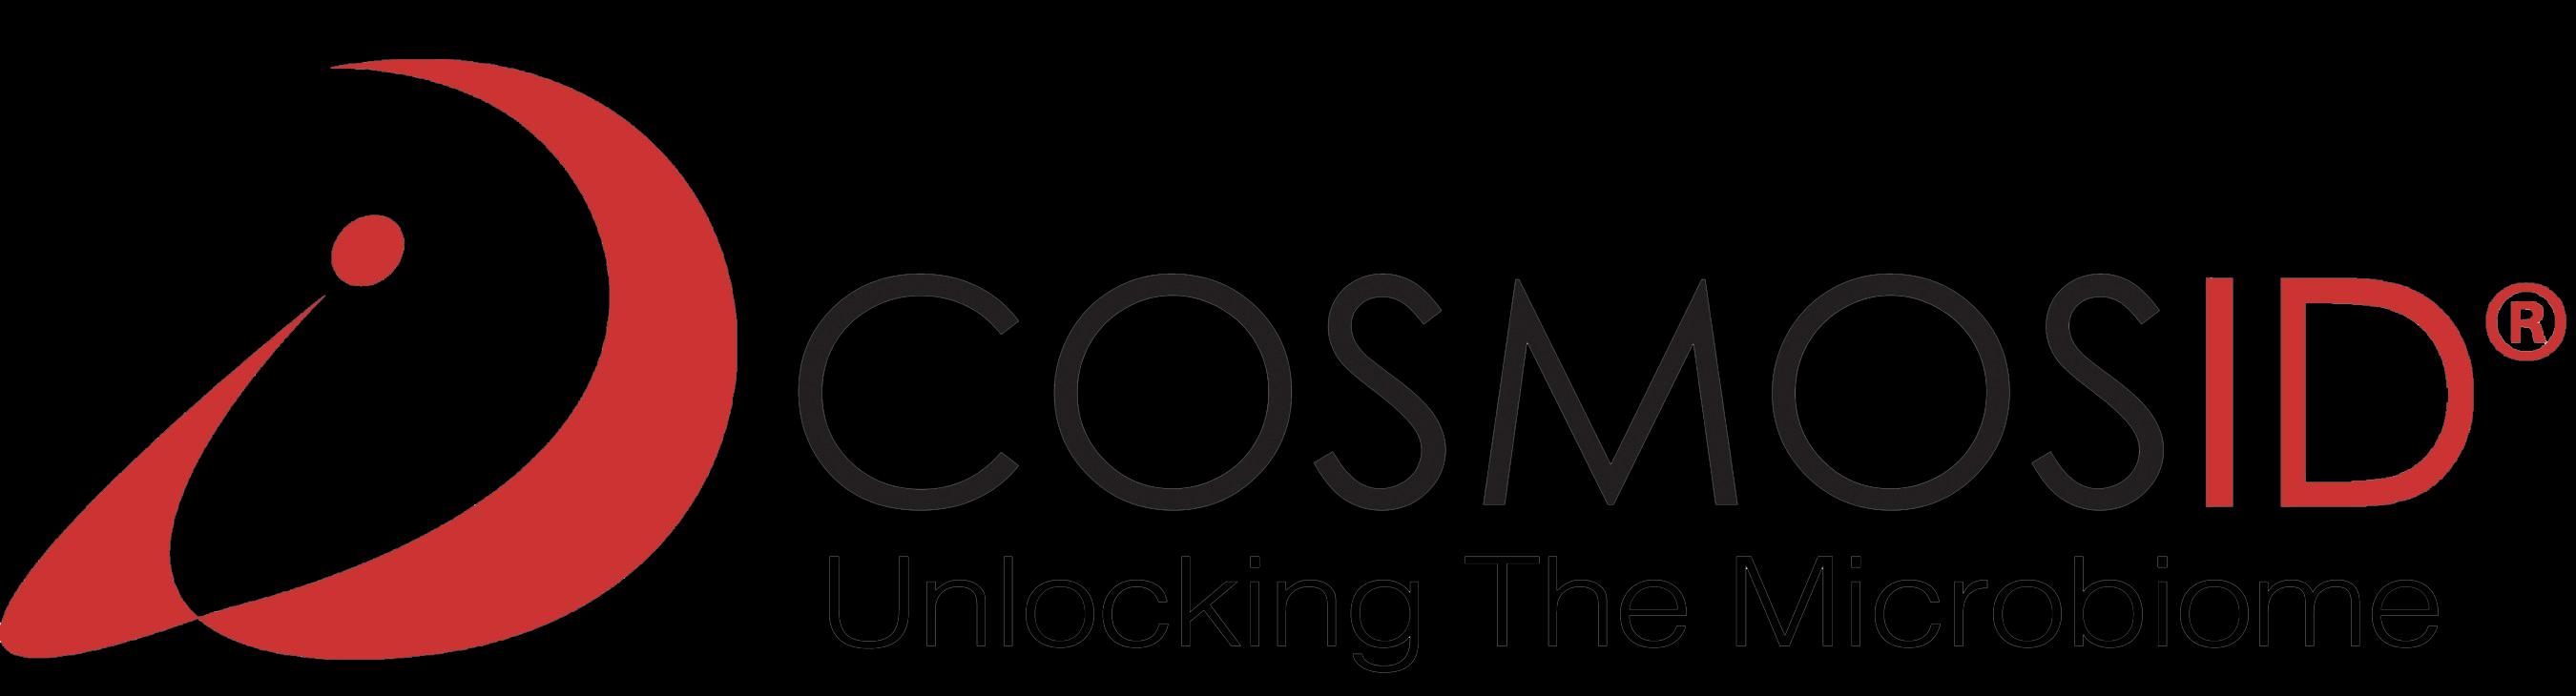 CosmosID_logo